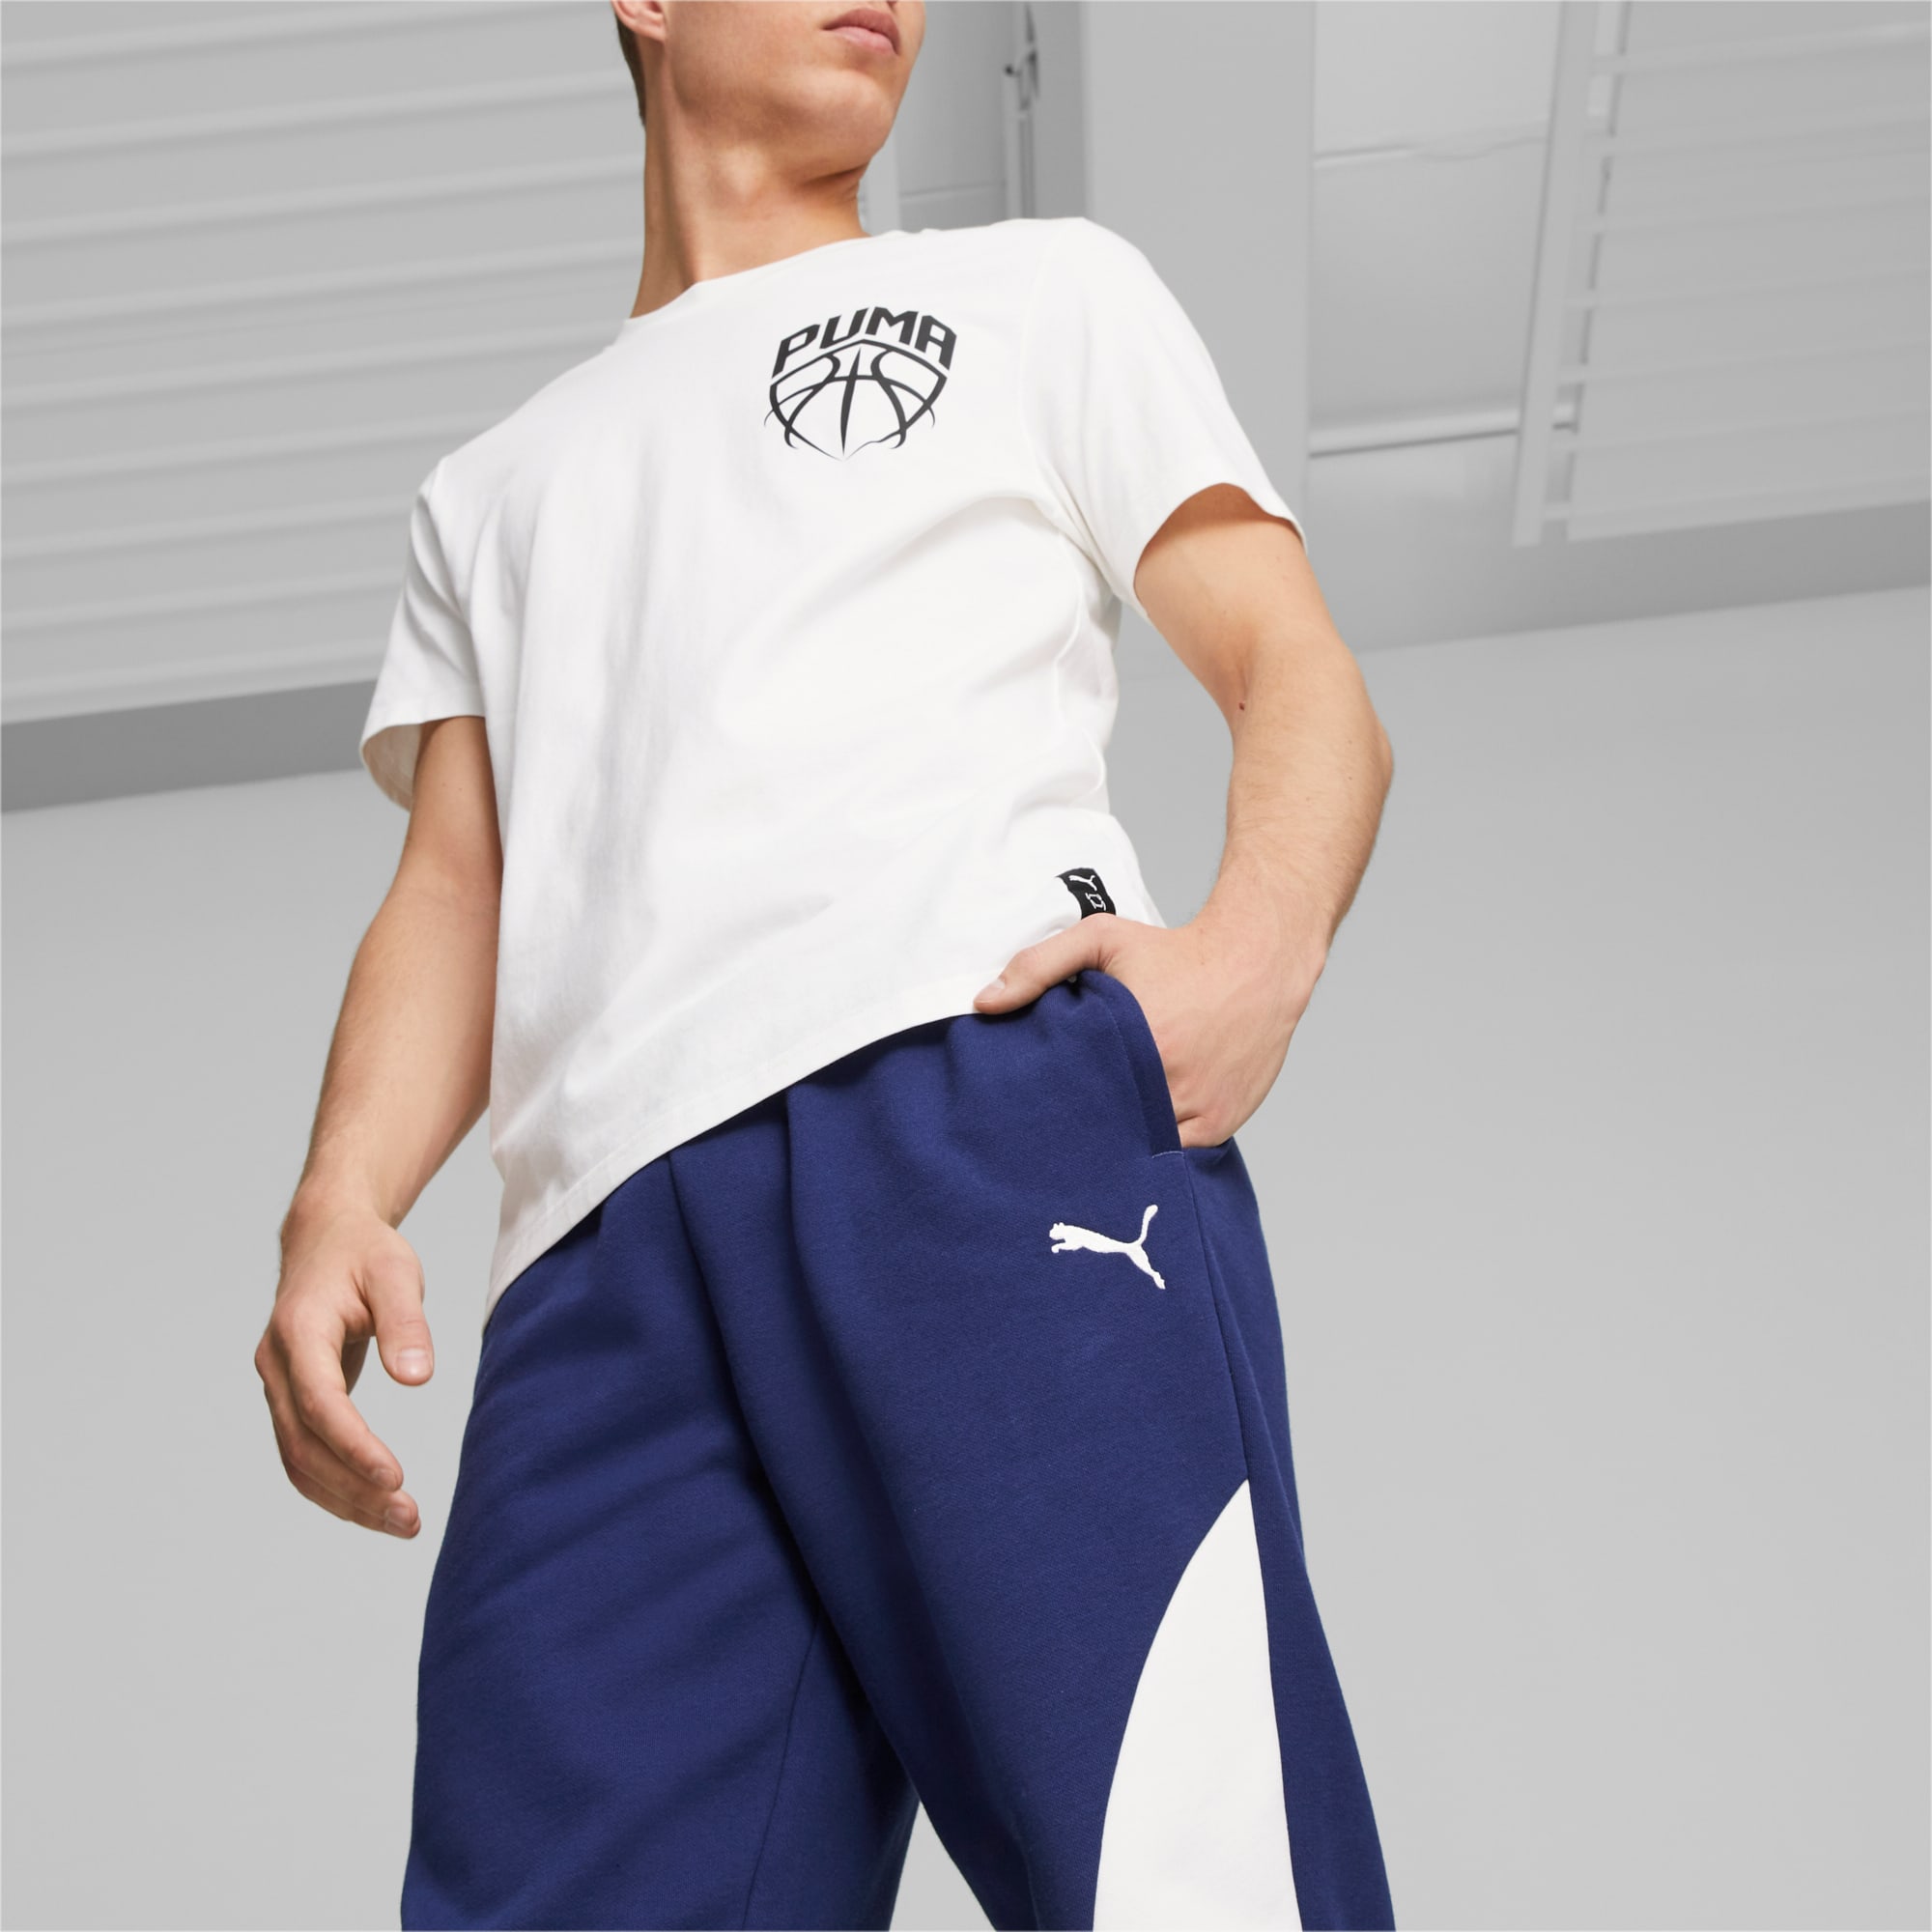 Blueprint Formstrip Men's Basketball Pants, white